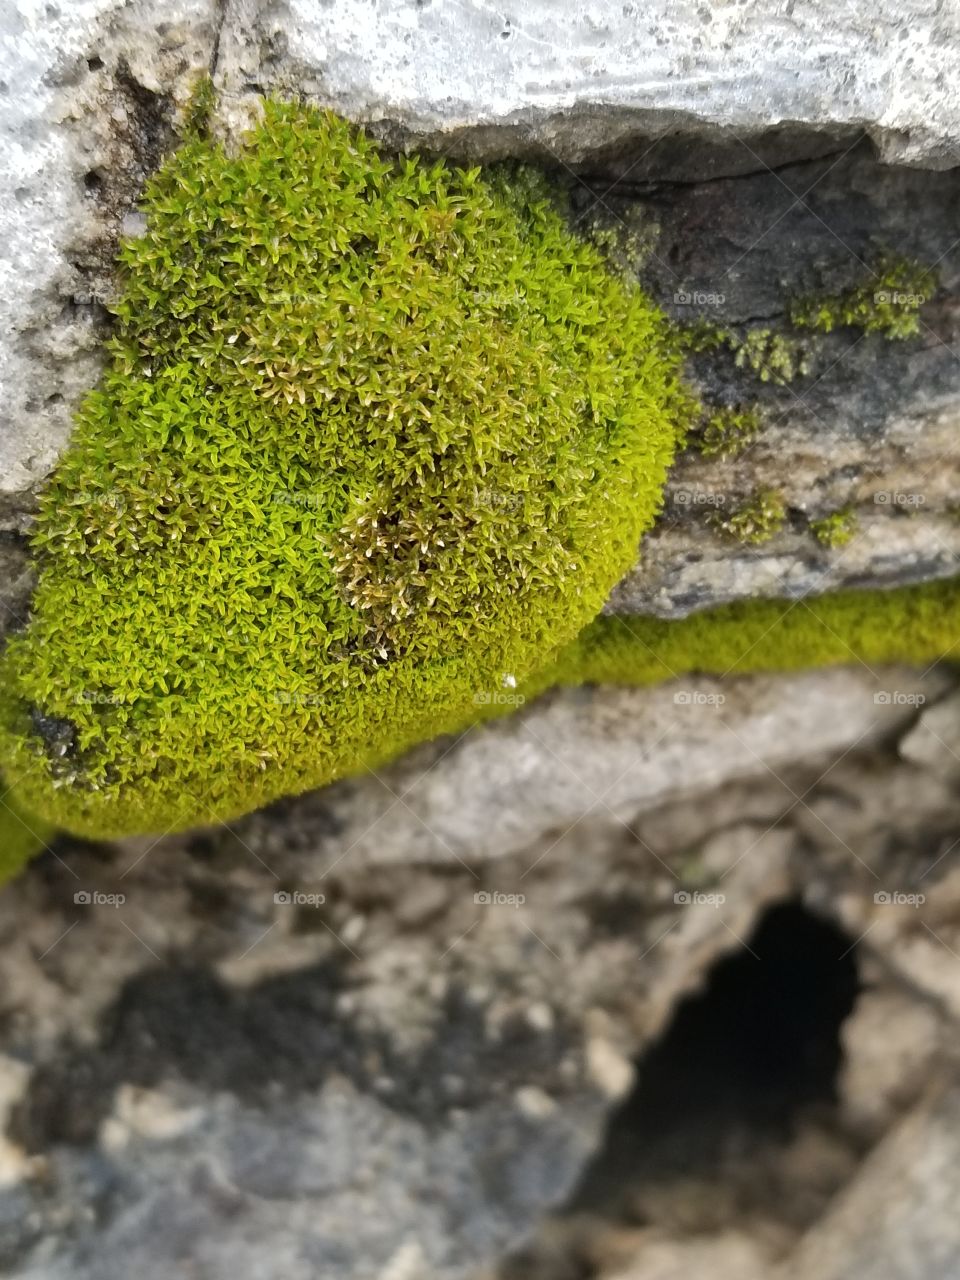 Miniature cave